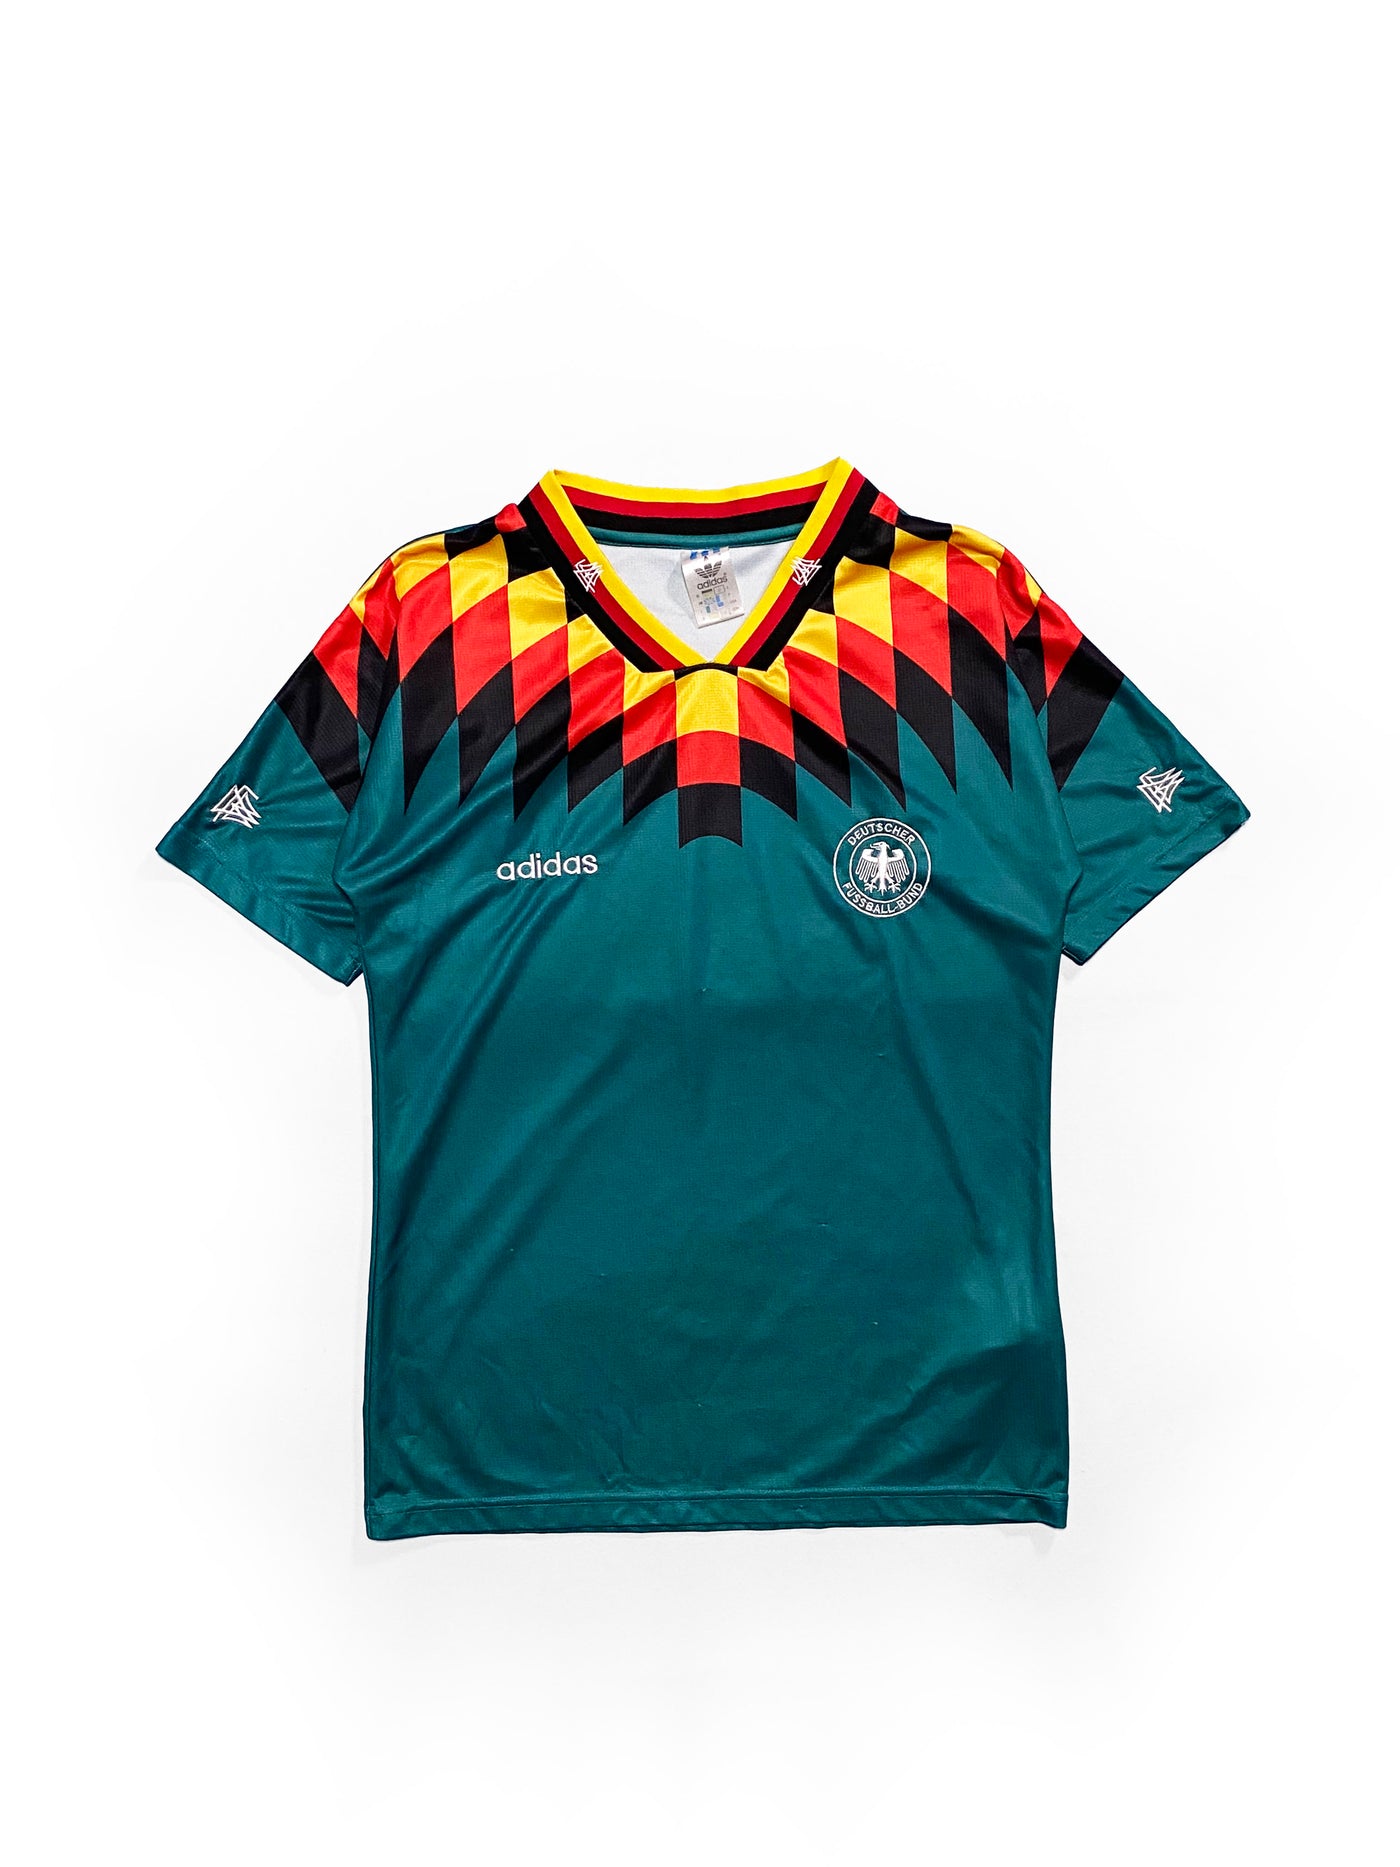 Vintage Adidas Germany Soccer Jersey